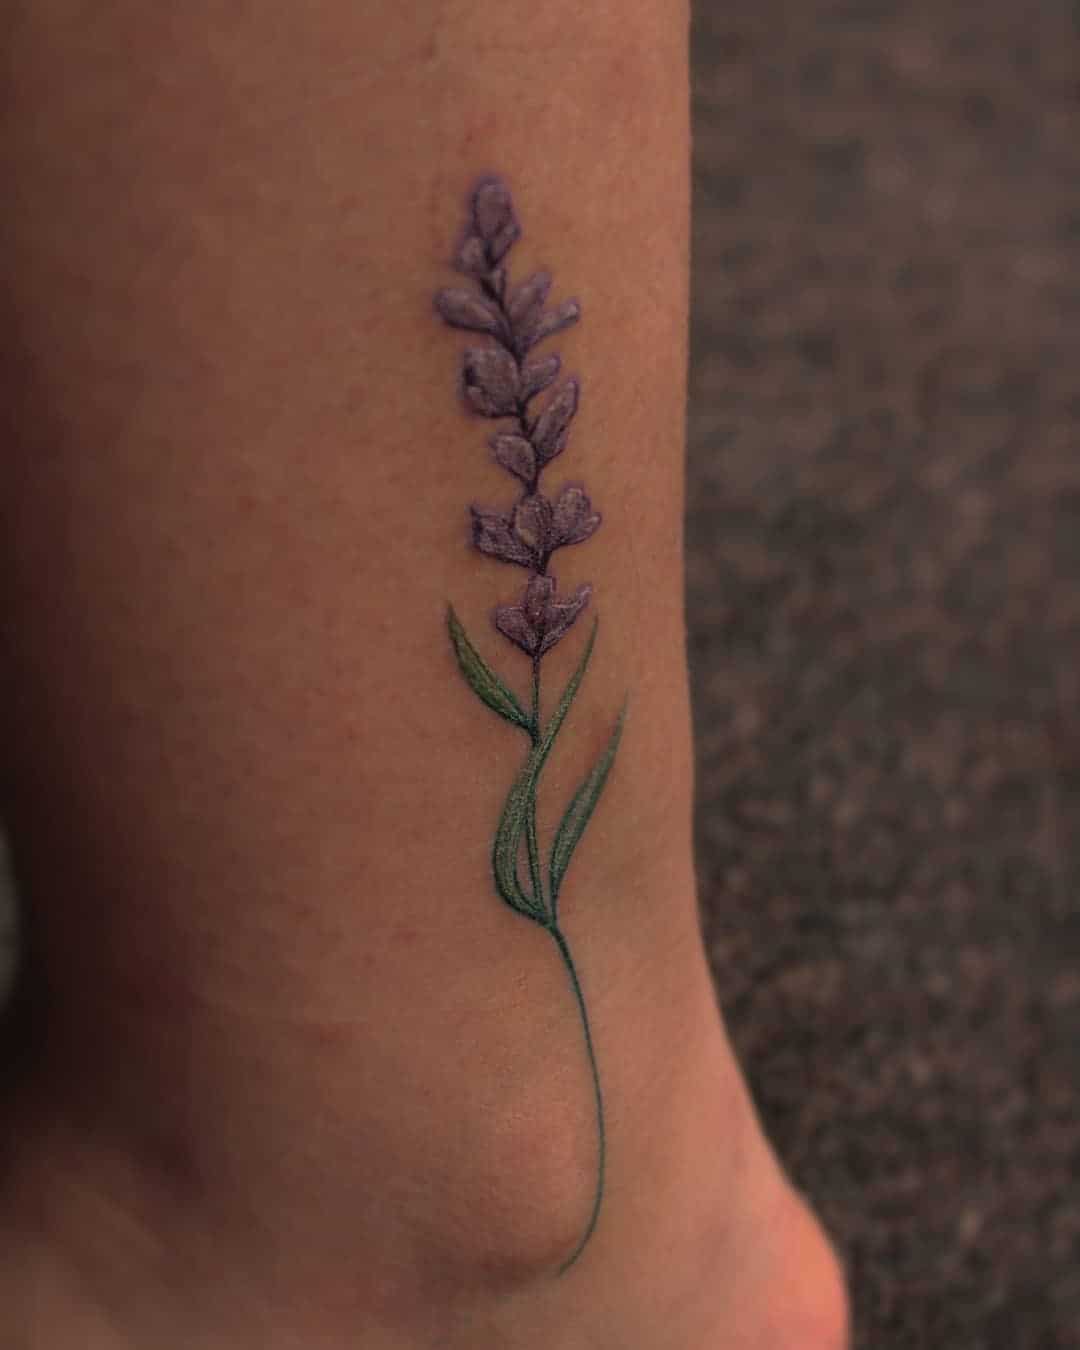 One Purple Lavender tattoo on Ankle